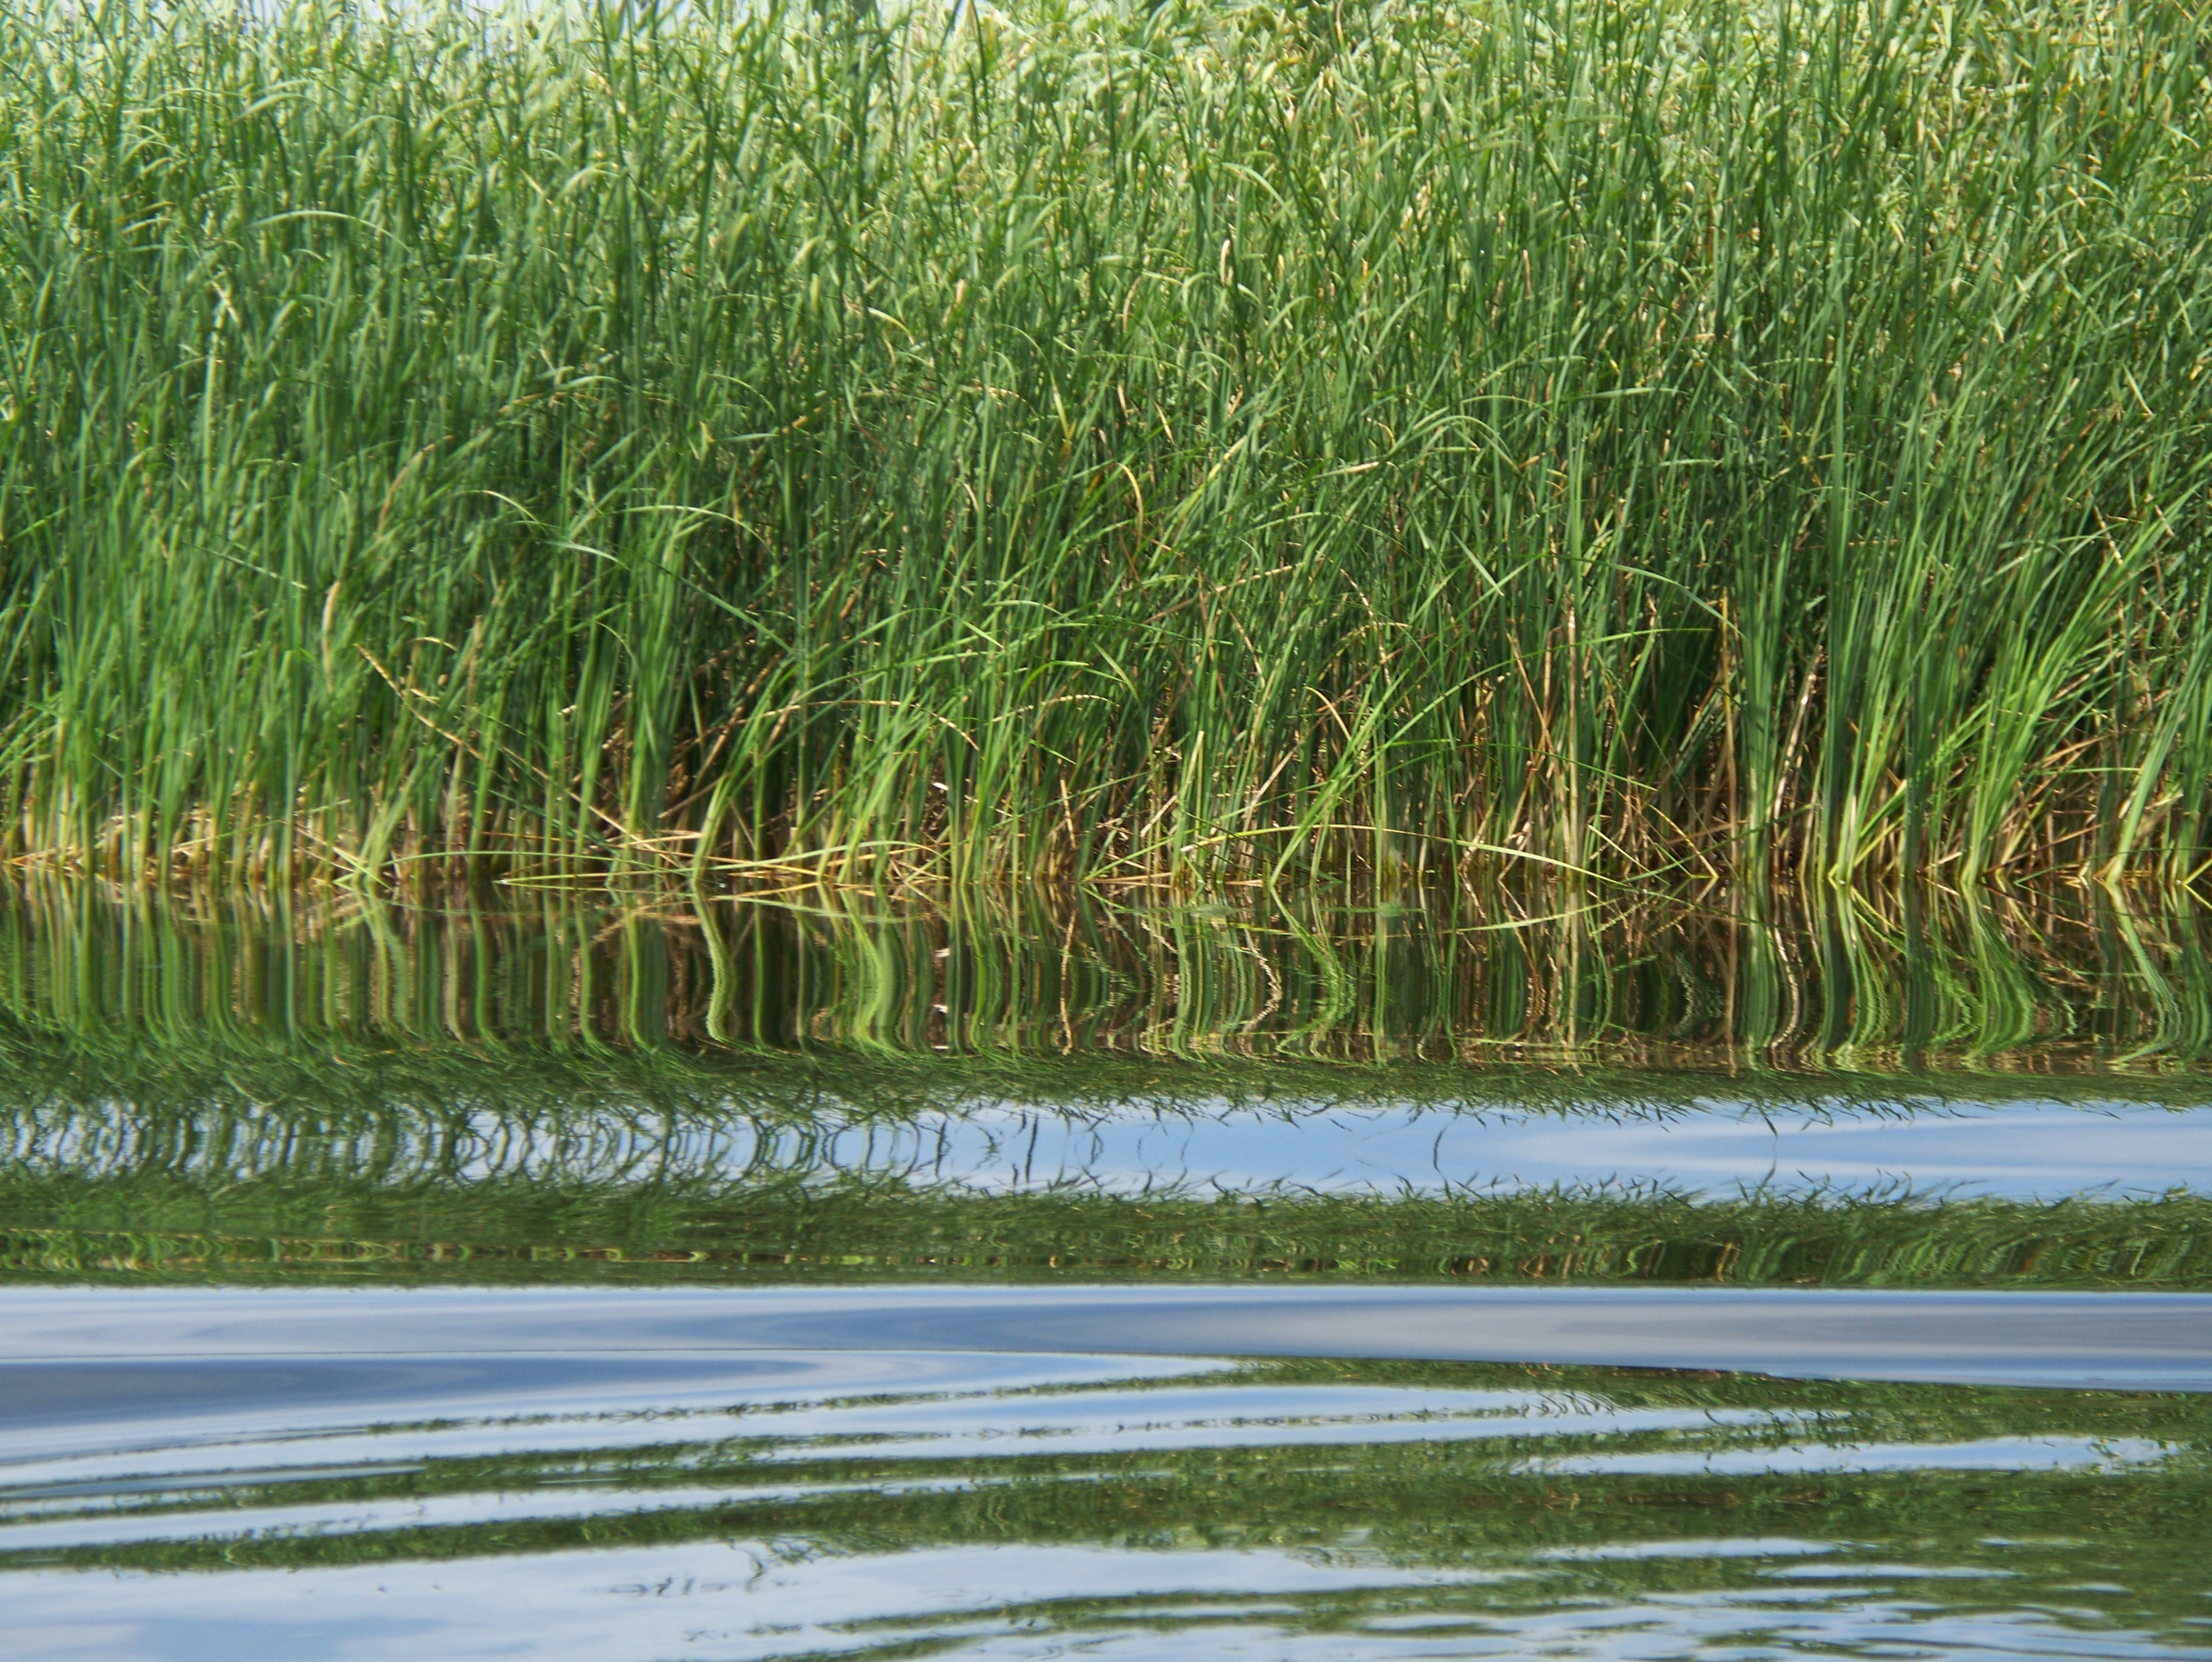 File:Danube Delta Reeds.JPG - Wikimedia Commons